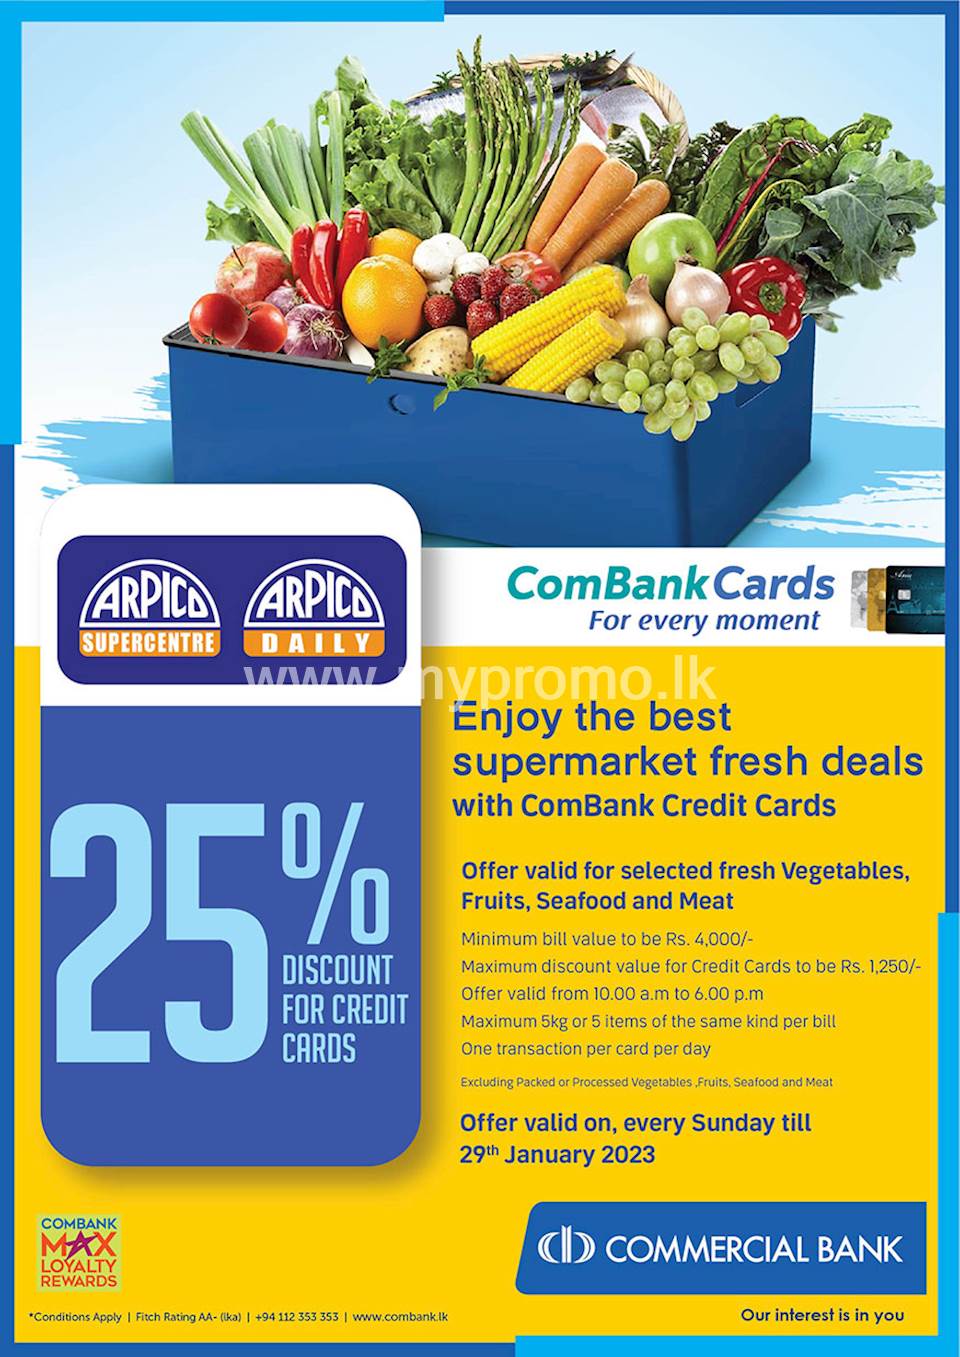 Enjoy the best supermarket fresh deals at Arpico with ComBank Credit Cards